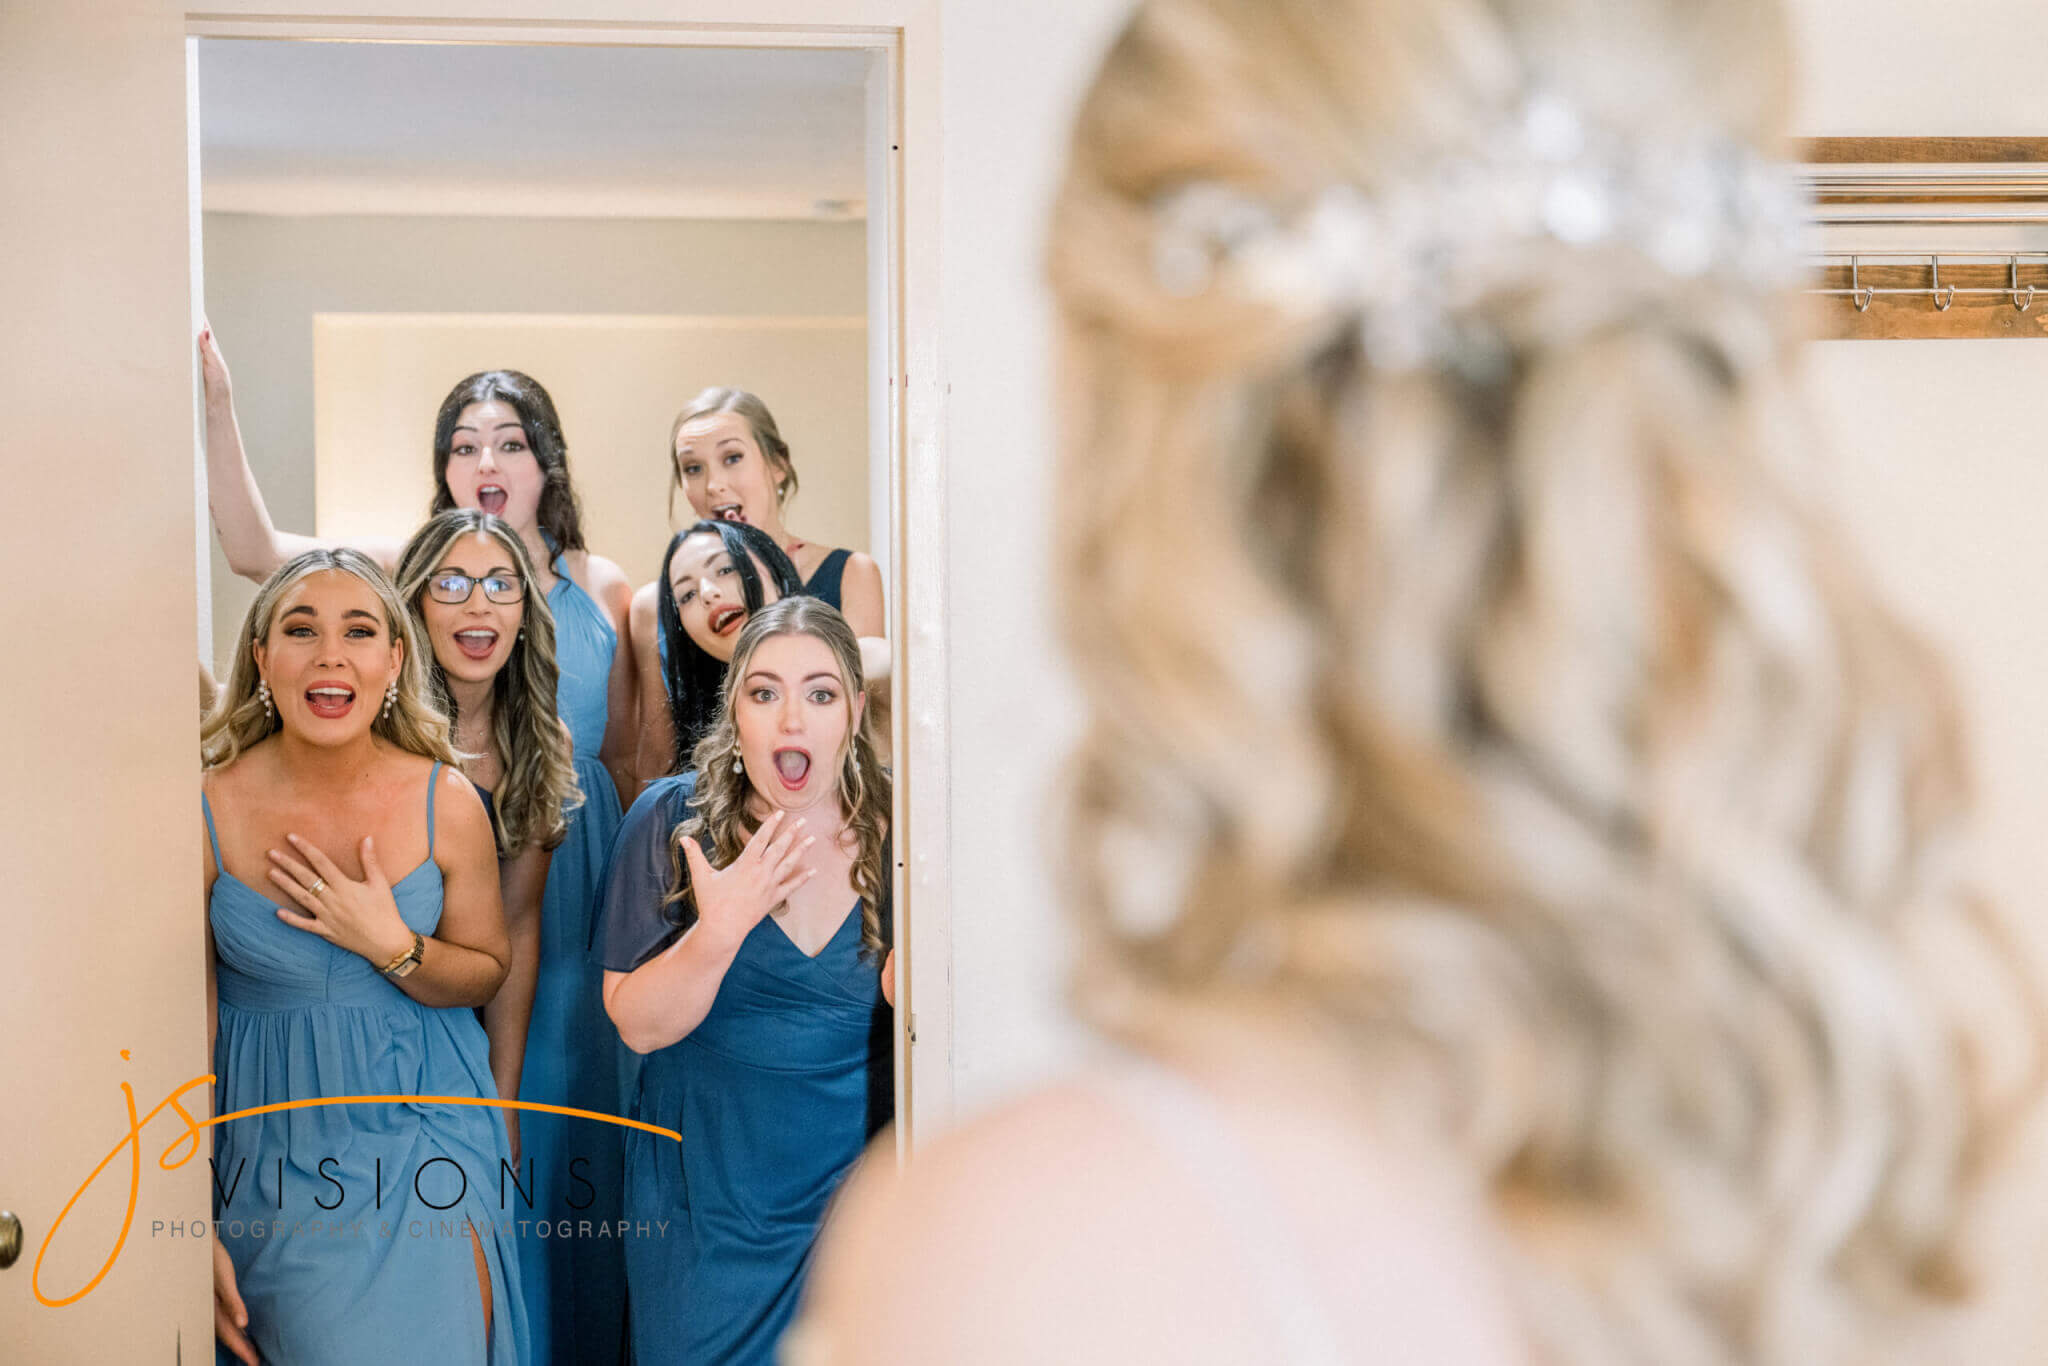 Am I a Bridezilla because my bridesmaids can’t afford my wedding?